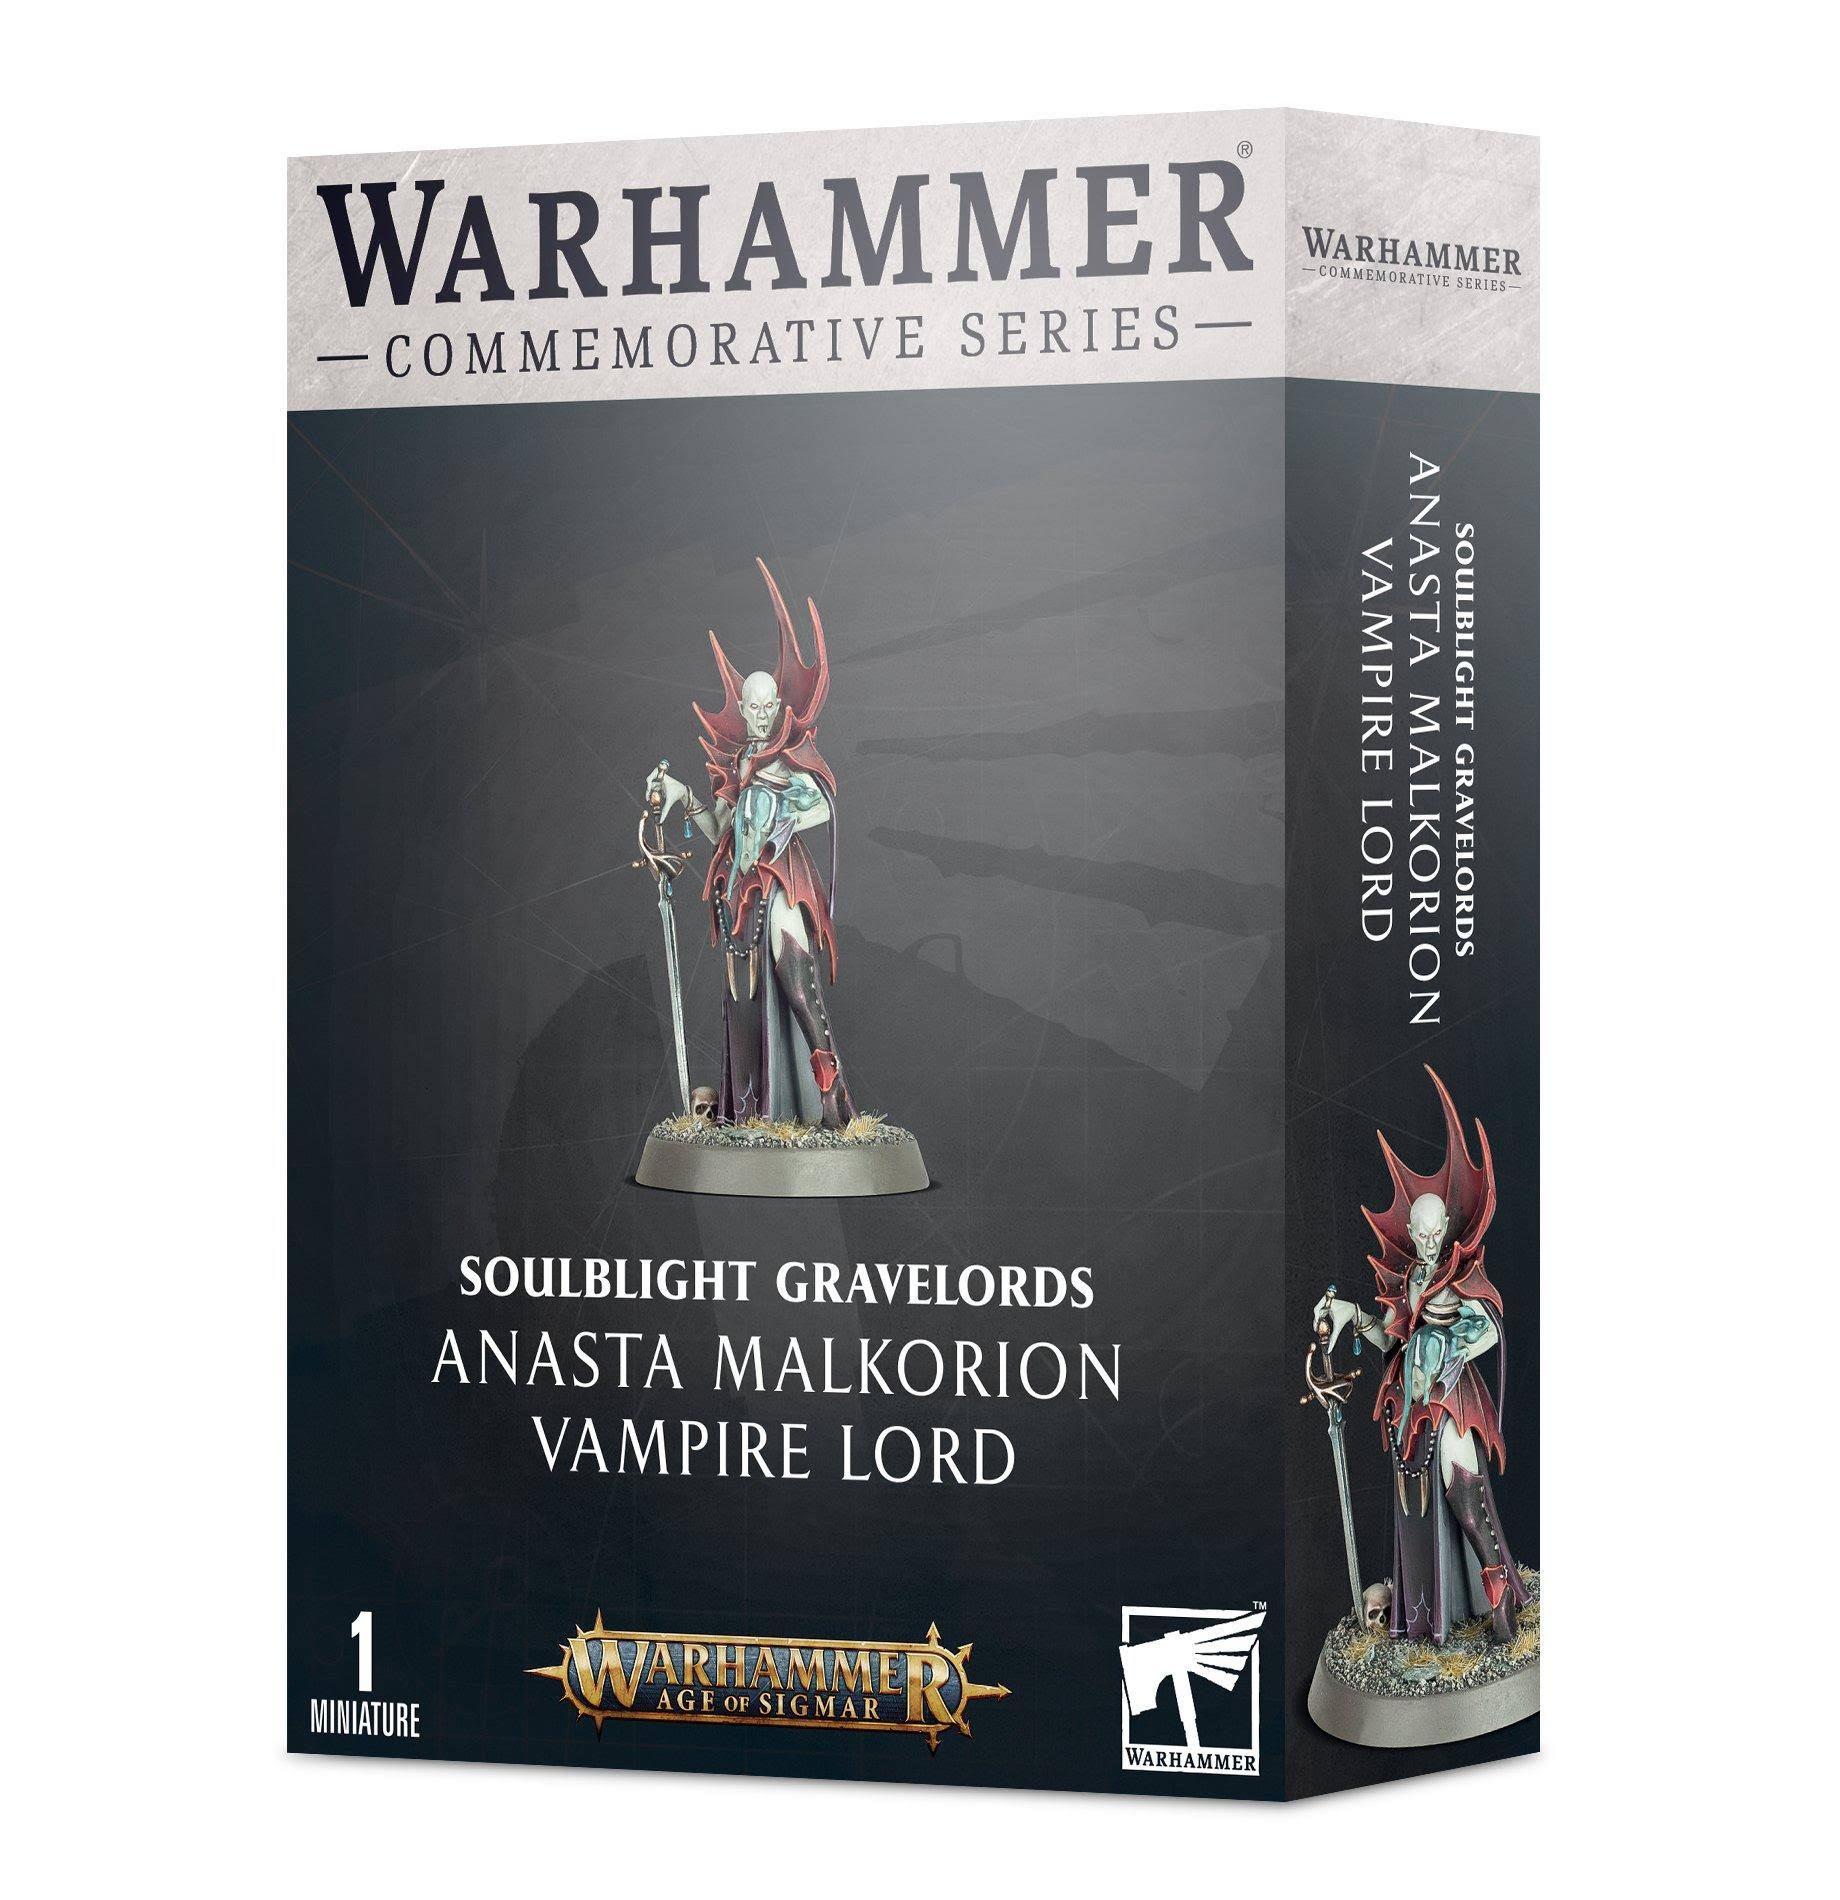 Warhammer: Age of Sigmar Anasta Malkorain Vampire Lord